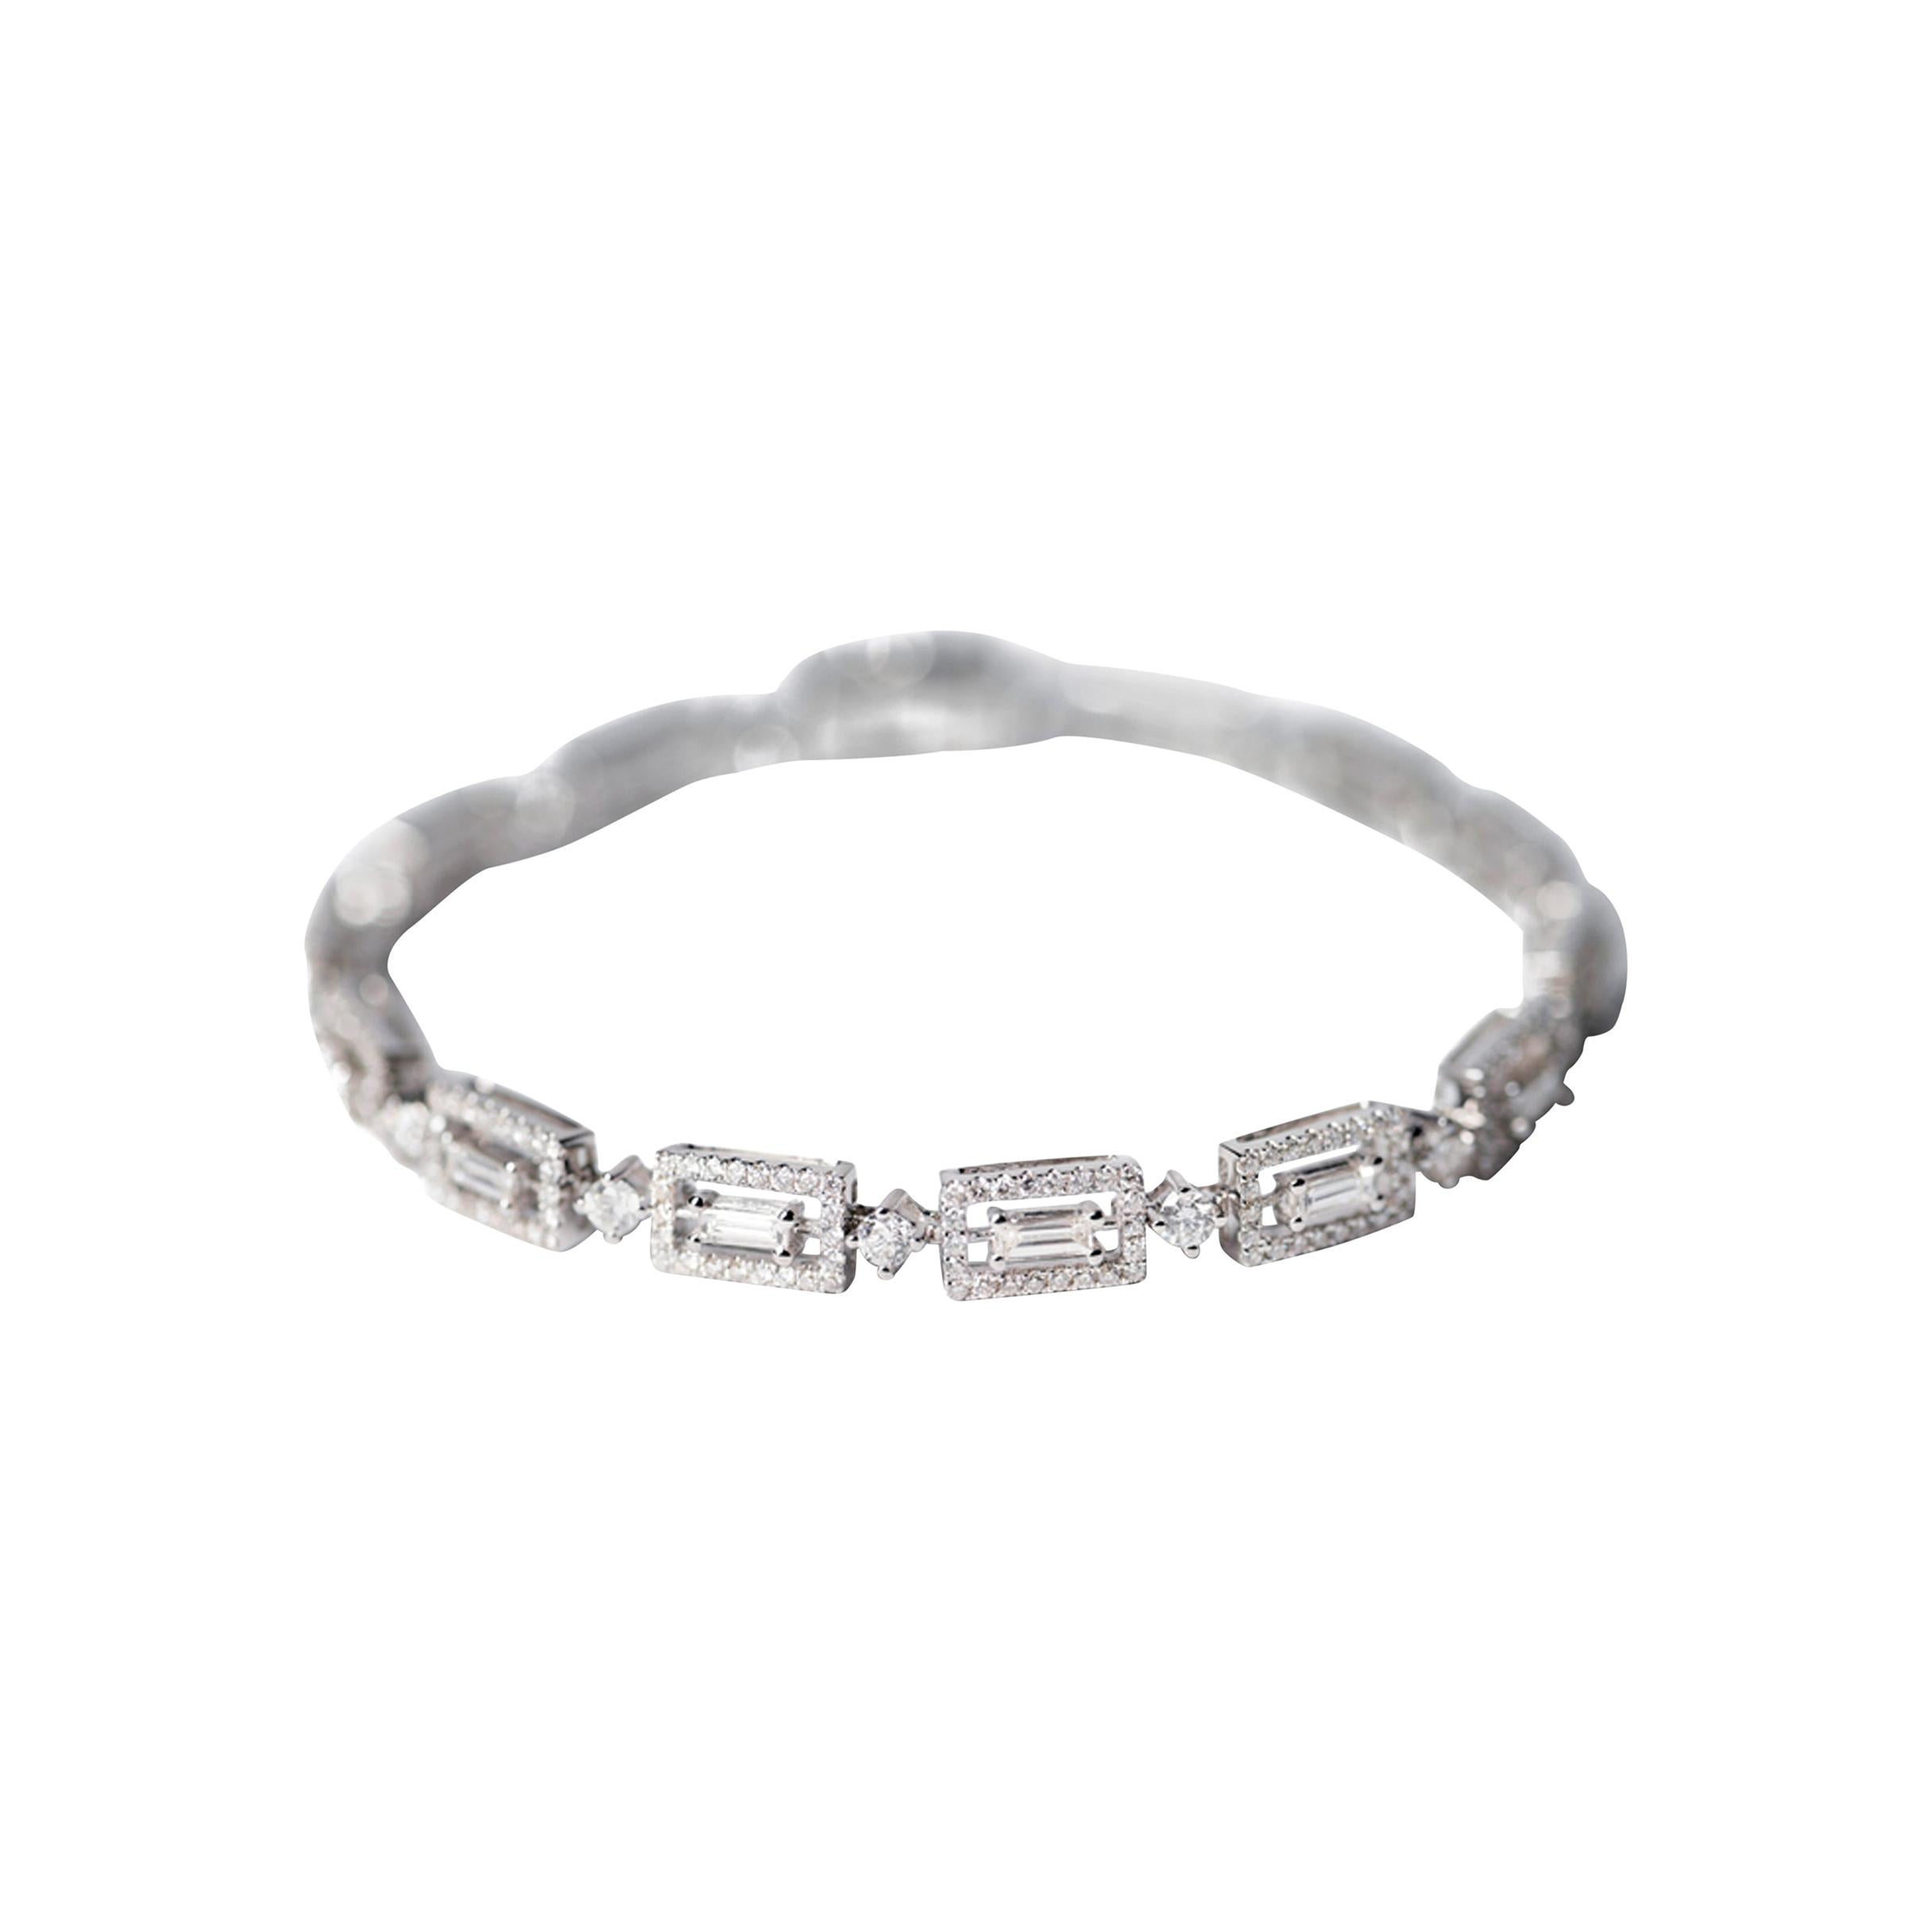 Art Deco Style Baguette Diamond White Gold Bracelet with Round Diamond Details For Sale